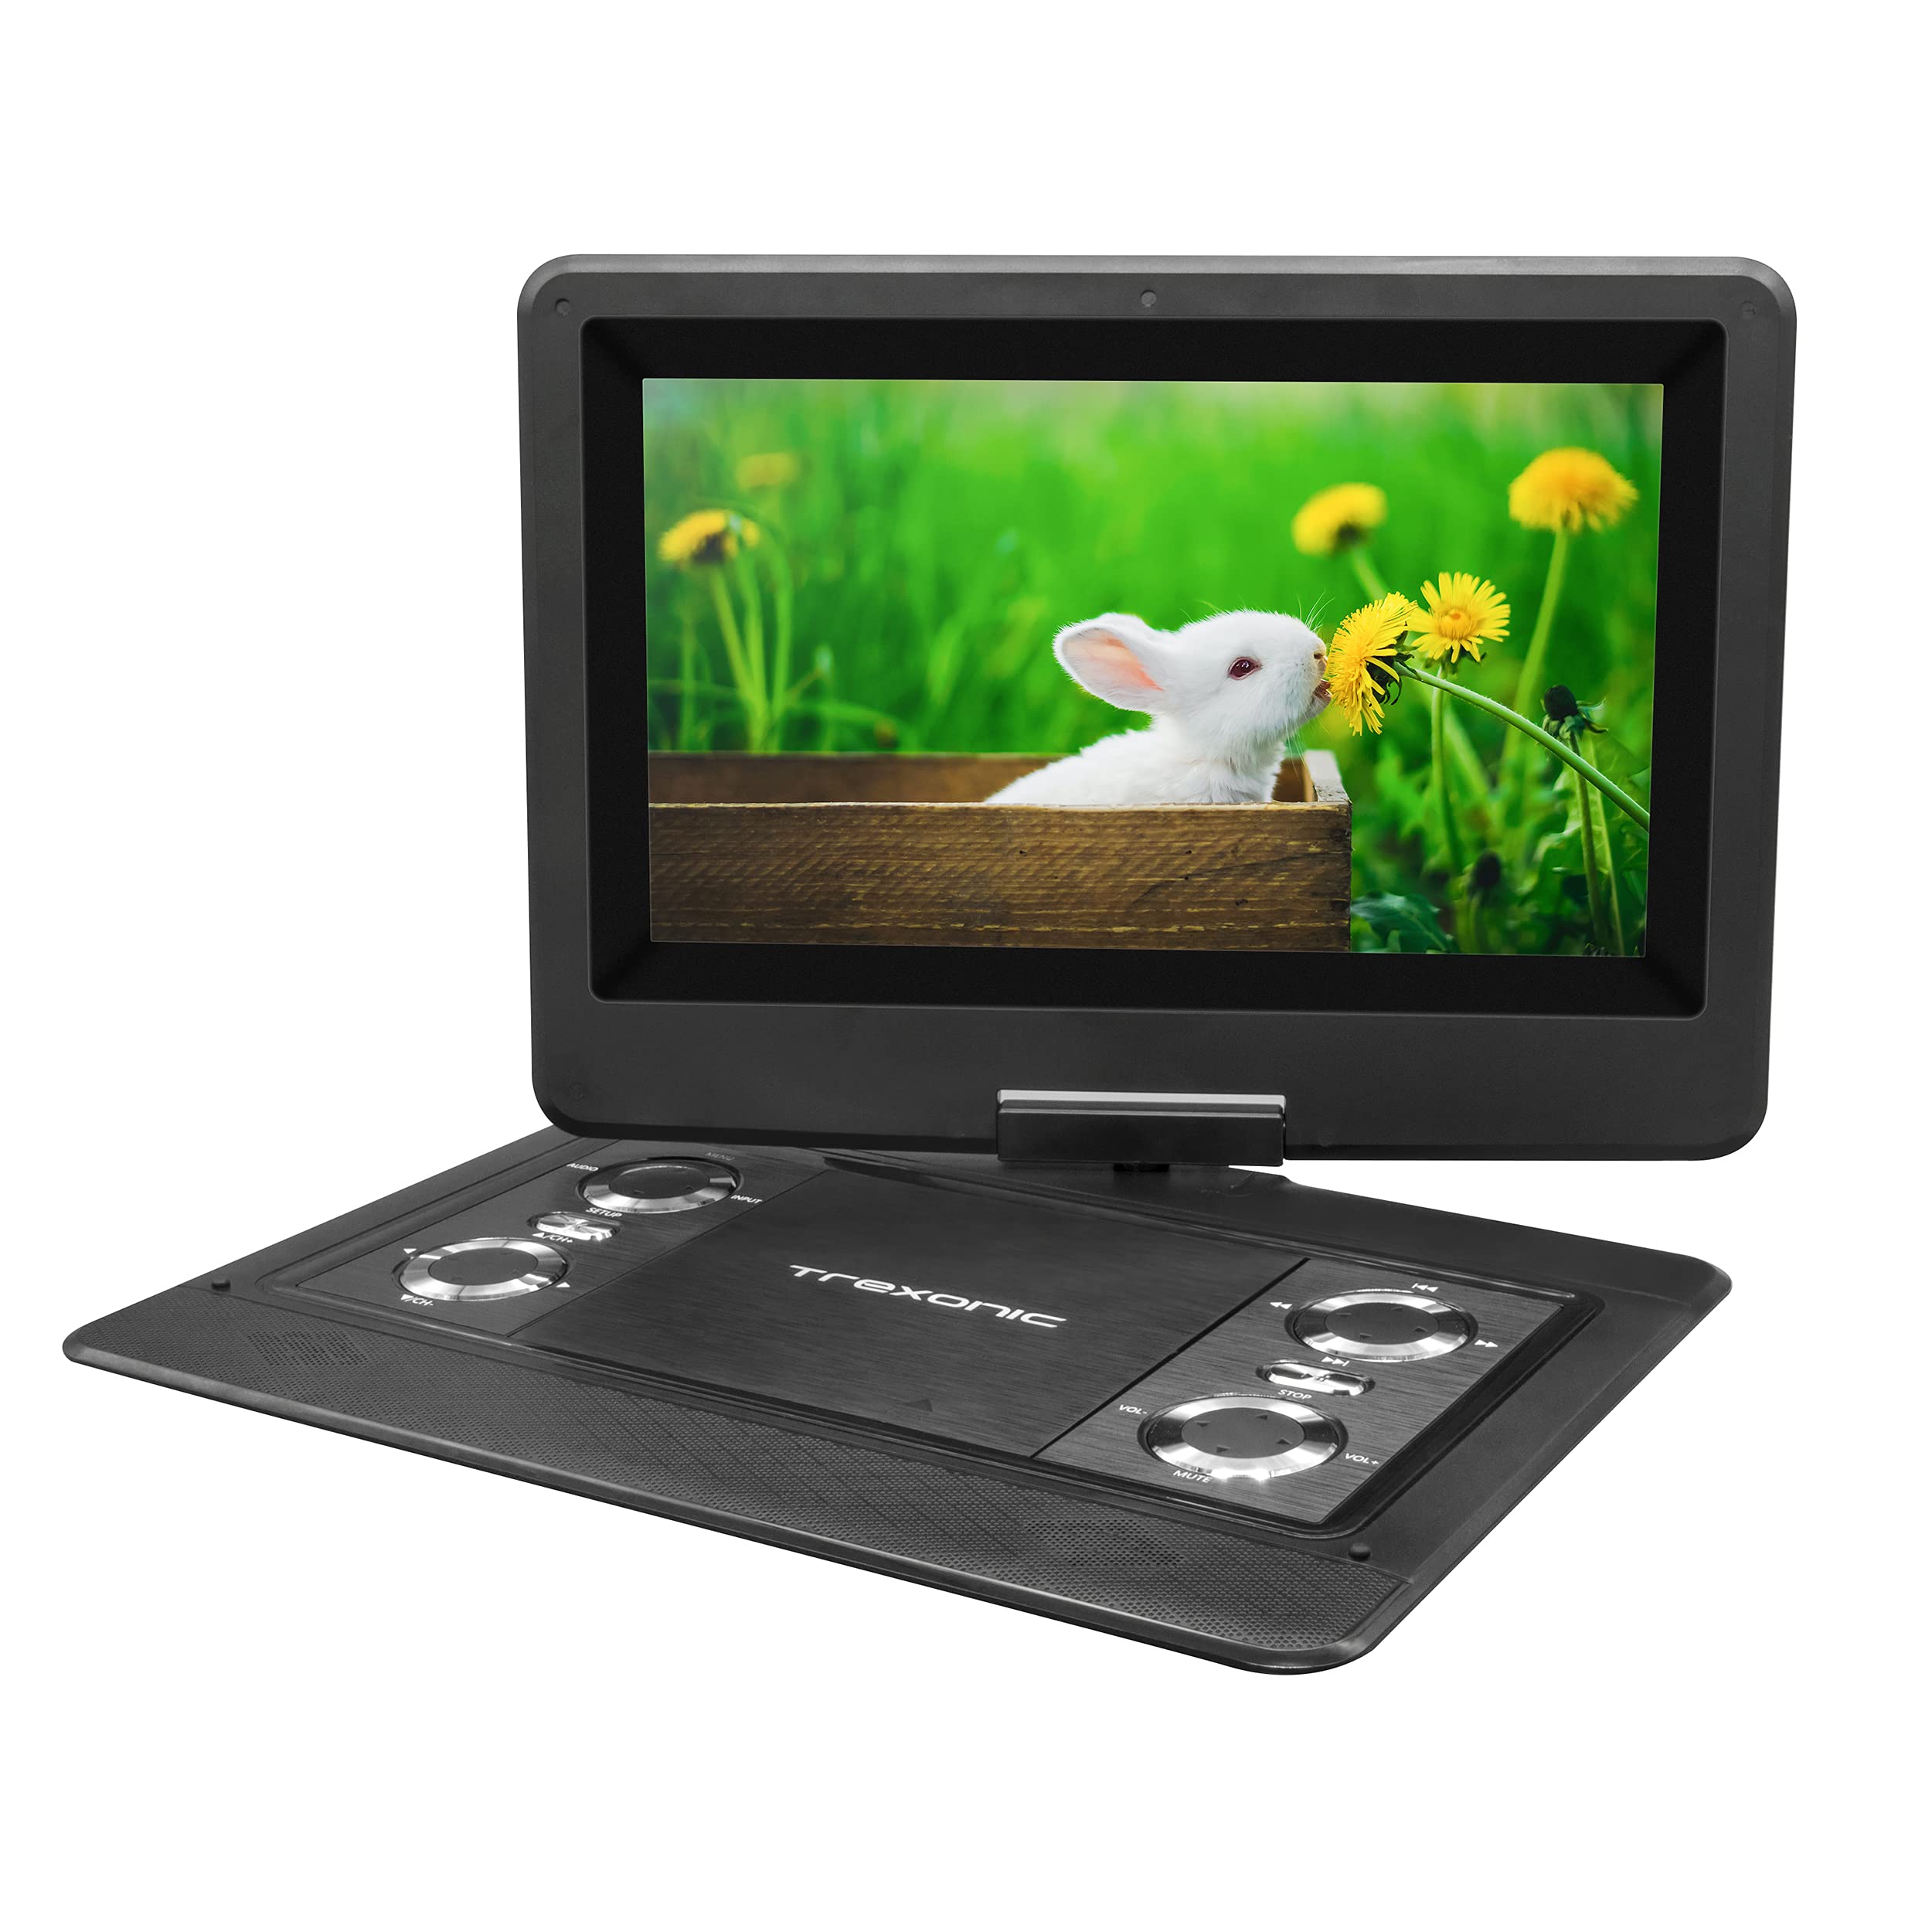 Trexonic 12.5 英寸便携式电视+DVD 播放器，带彩色 TFT LED 屏幕和 USB/HD/AV 输入